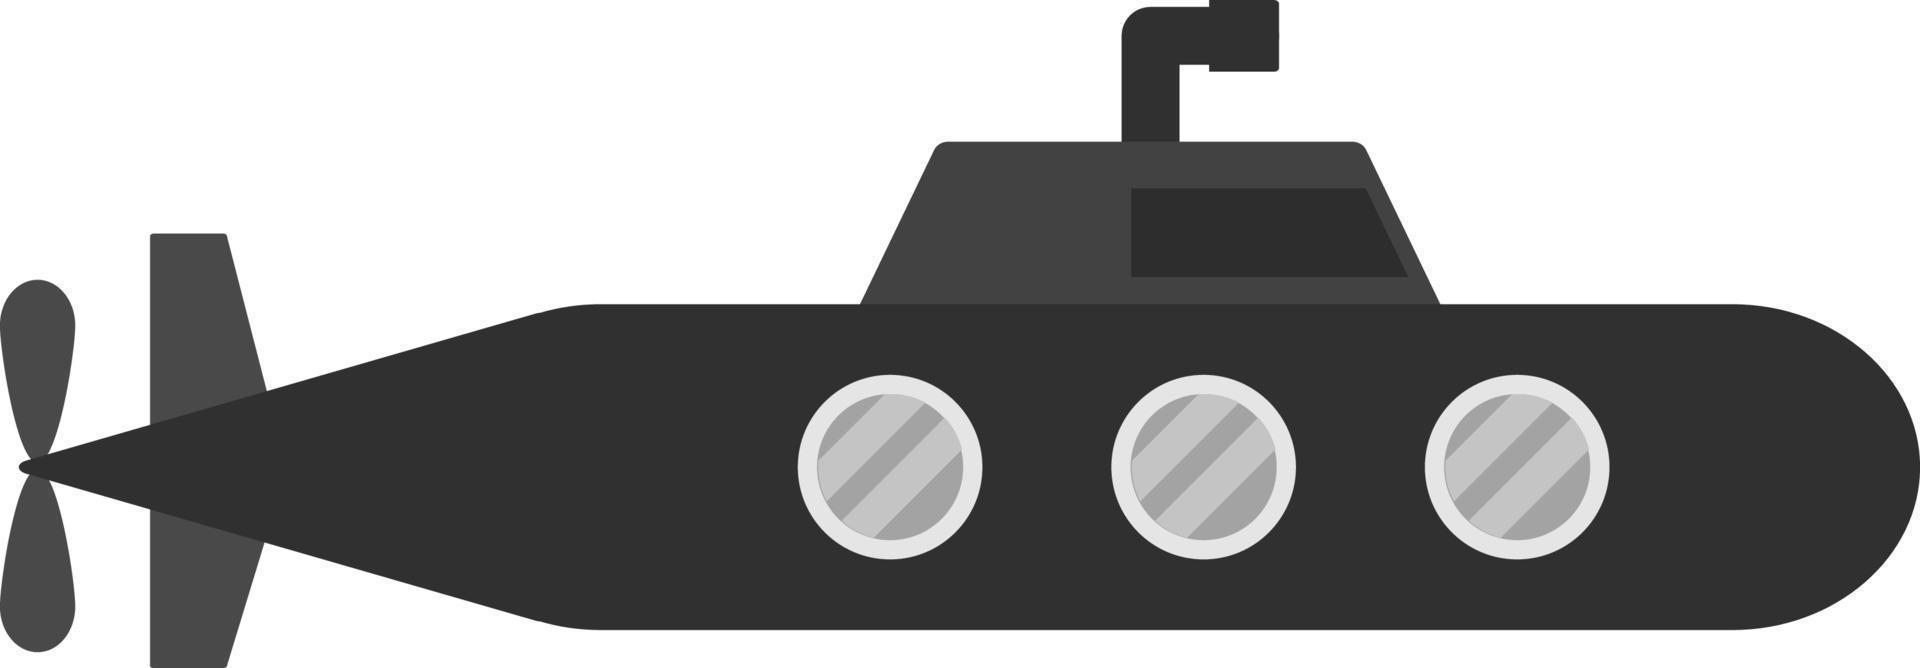 Submarine icon, flat illustration vector